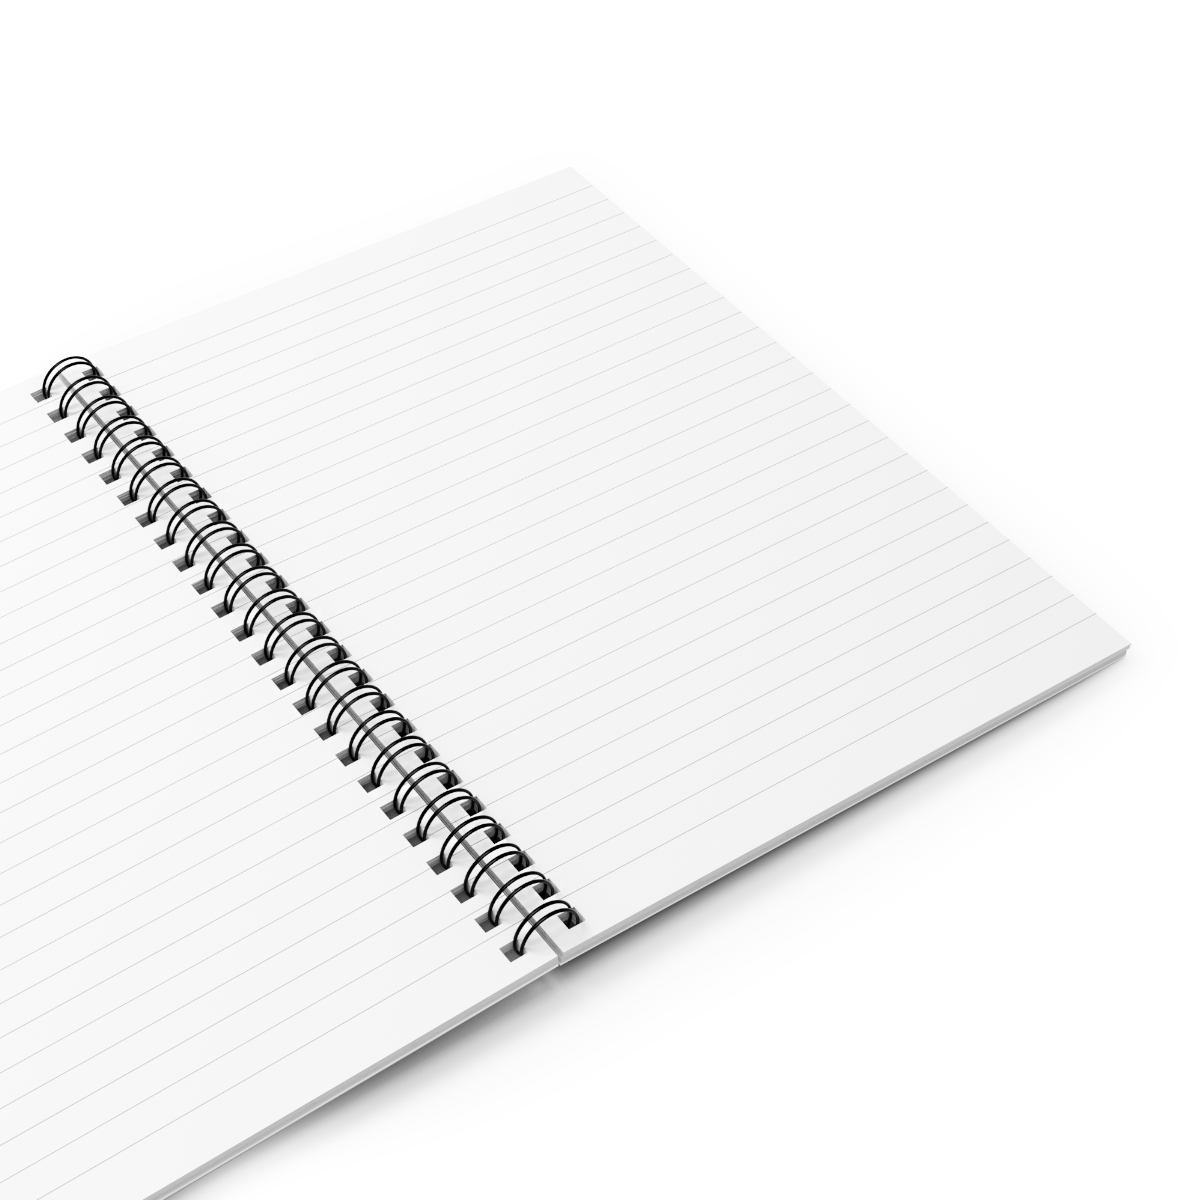 "Miskatonic University" Spiral Notebook - Ruled Line product thumbnail image